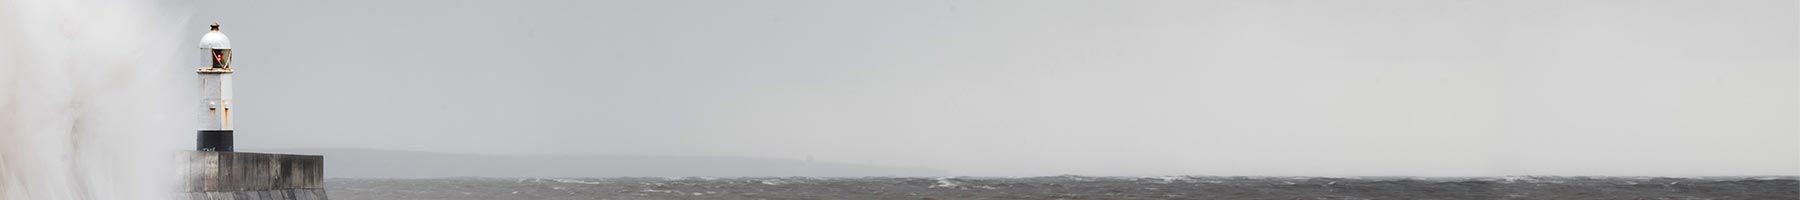 lighthouse on a misty coast